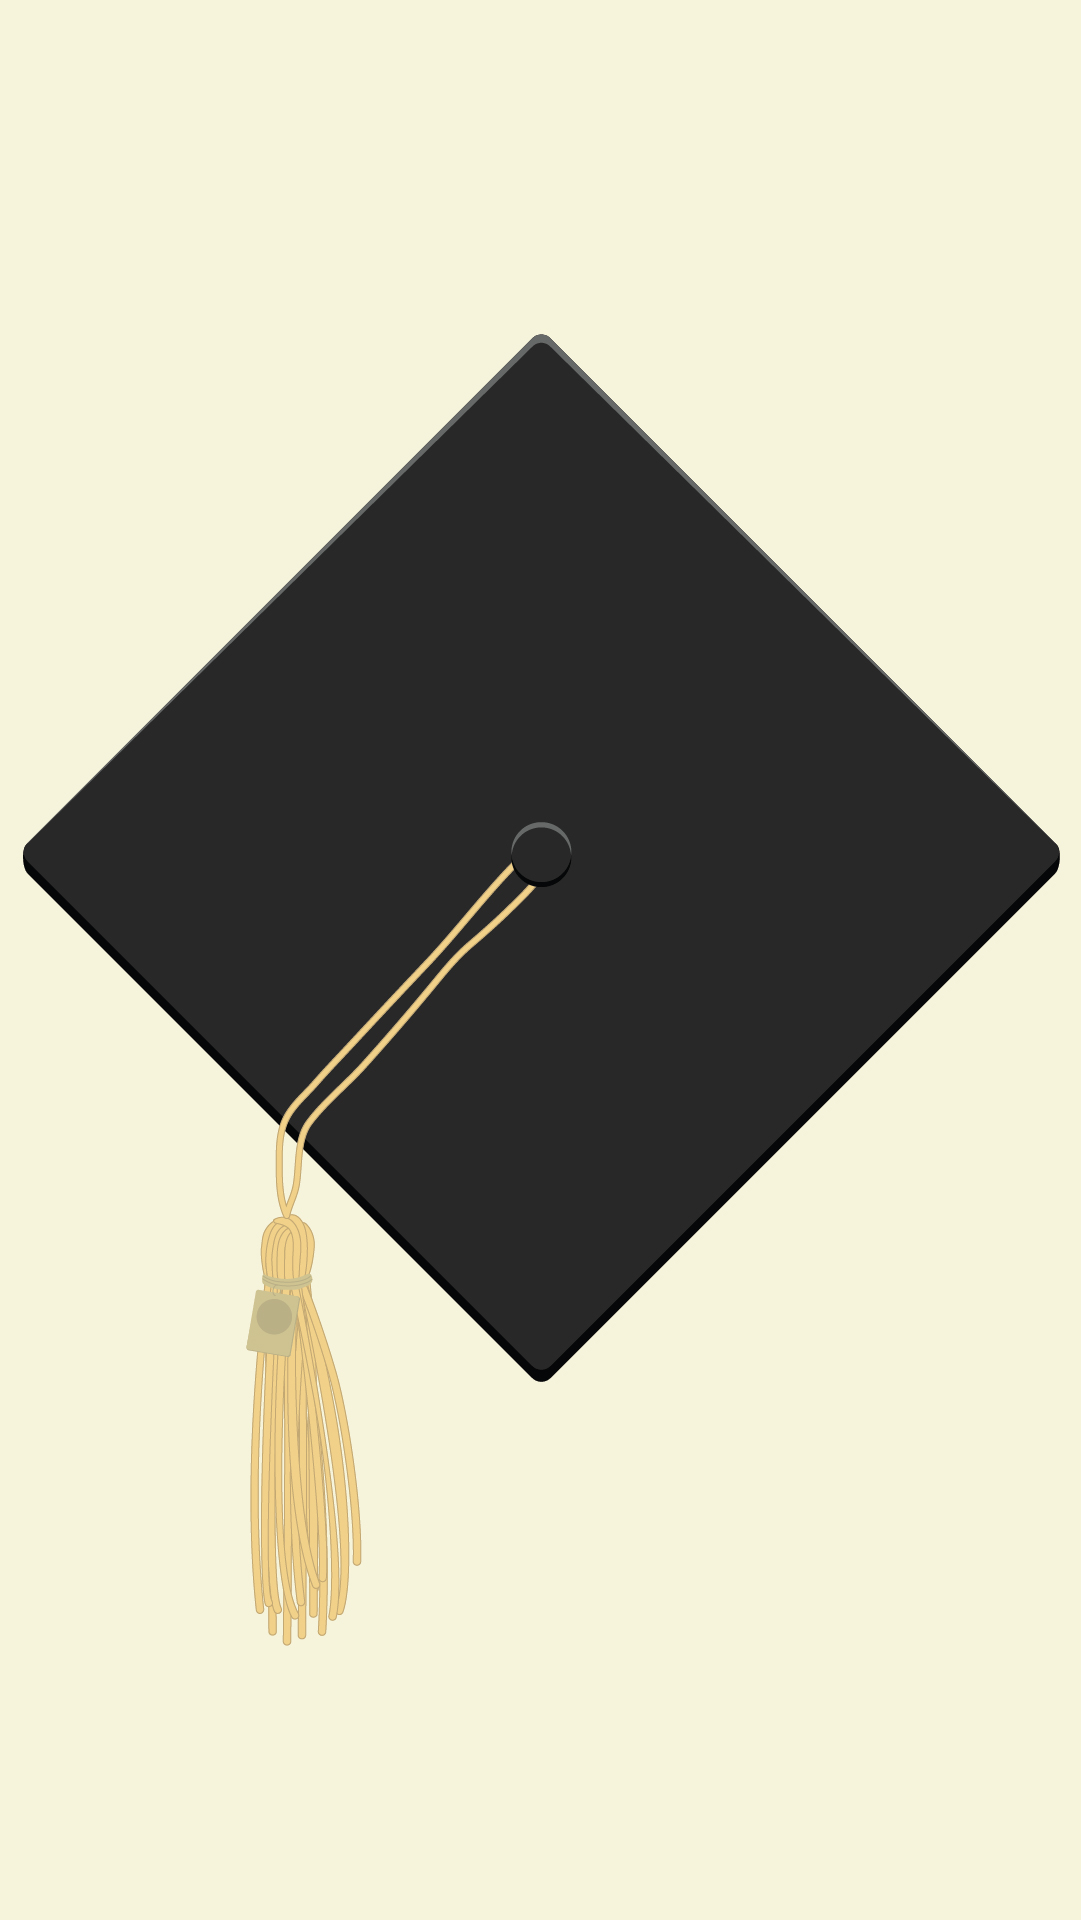 Top of a black graduation cap with a gold tassle